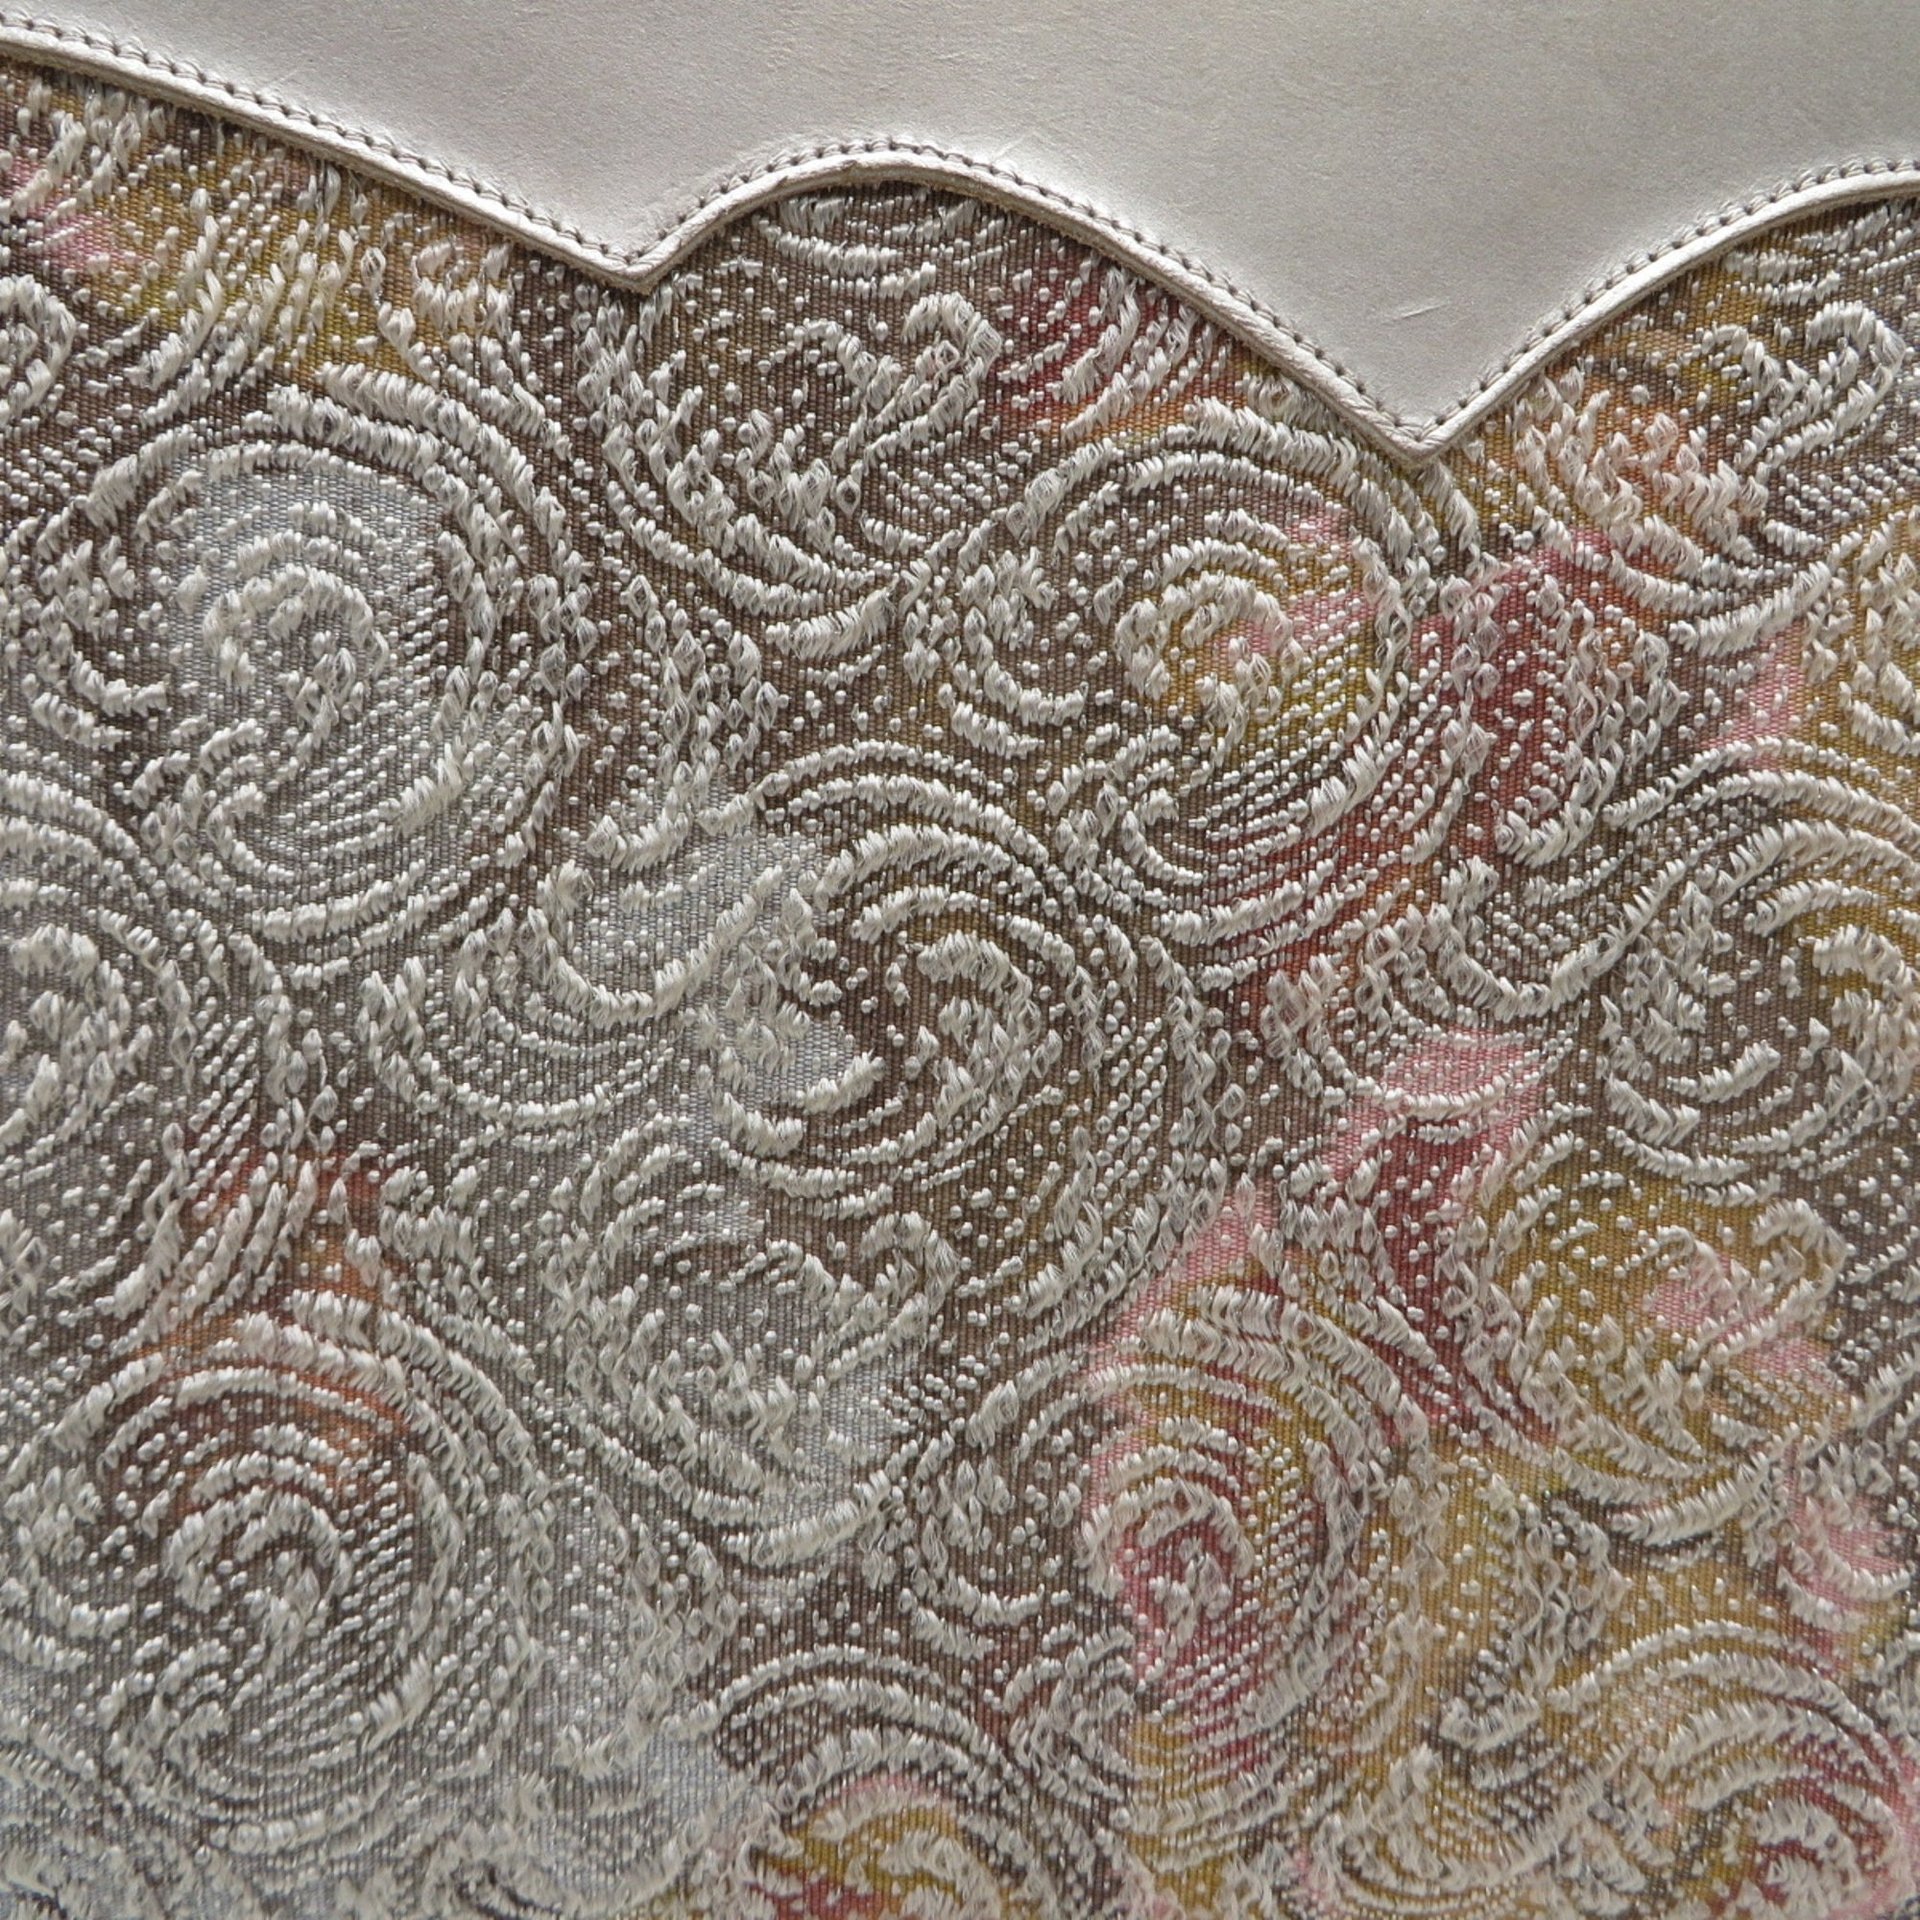 Johansen Tapestry Handbag, Vintage Pink, Gold and Tan Top Handle Purse